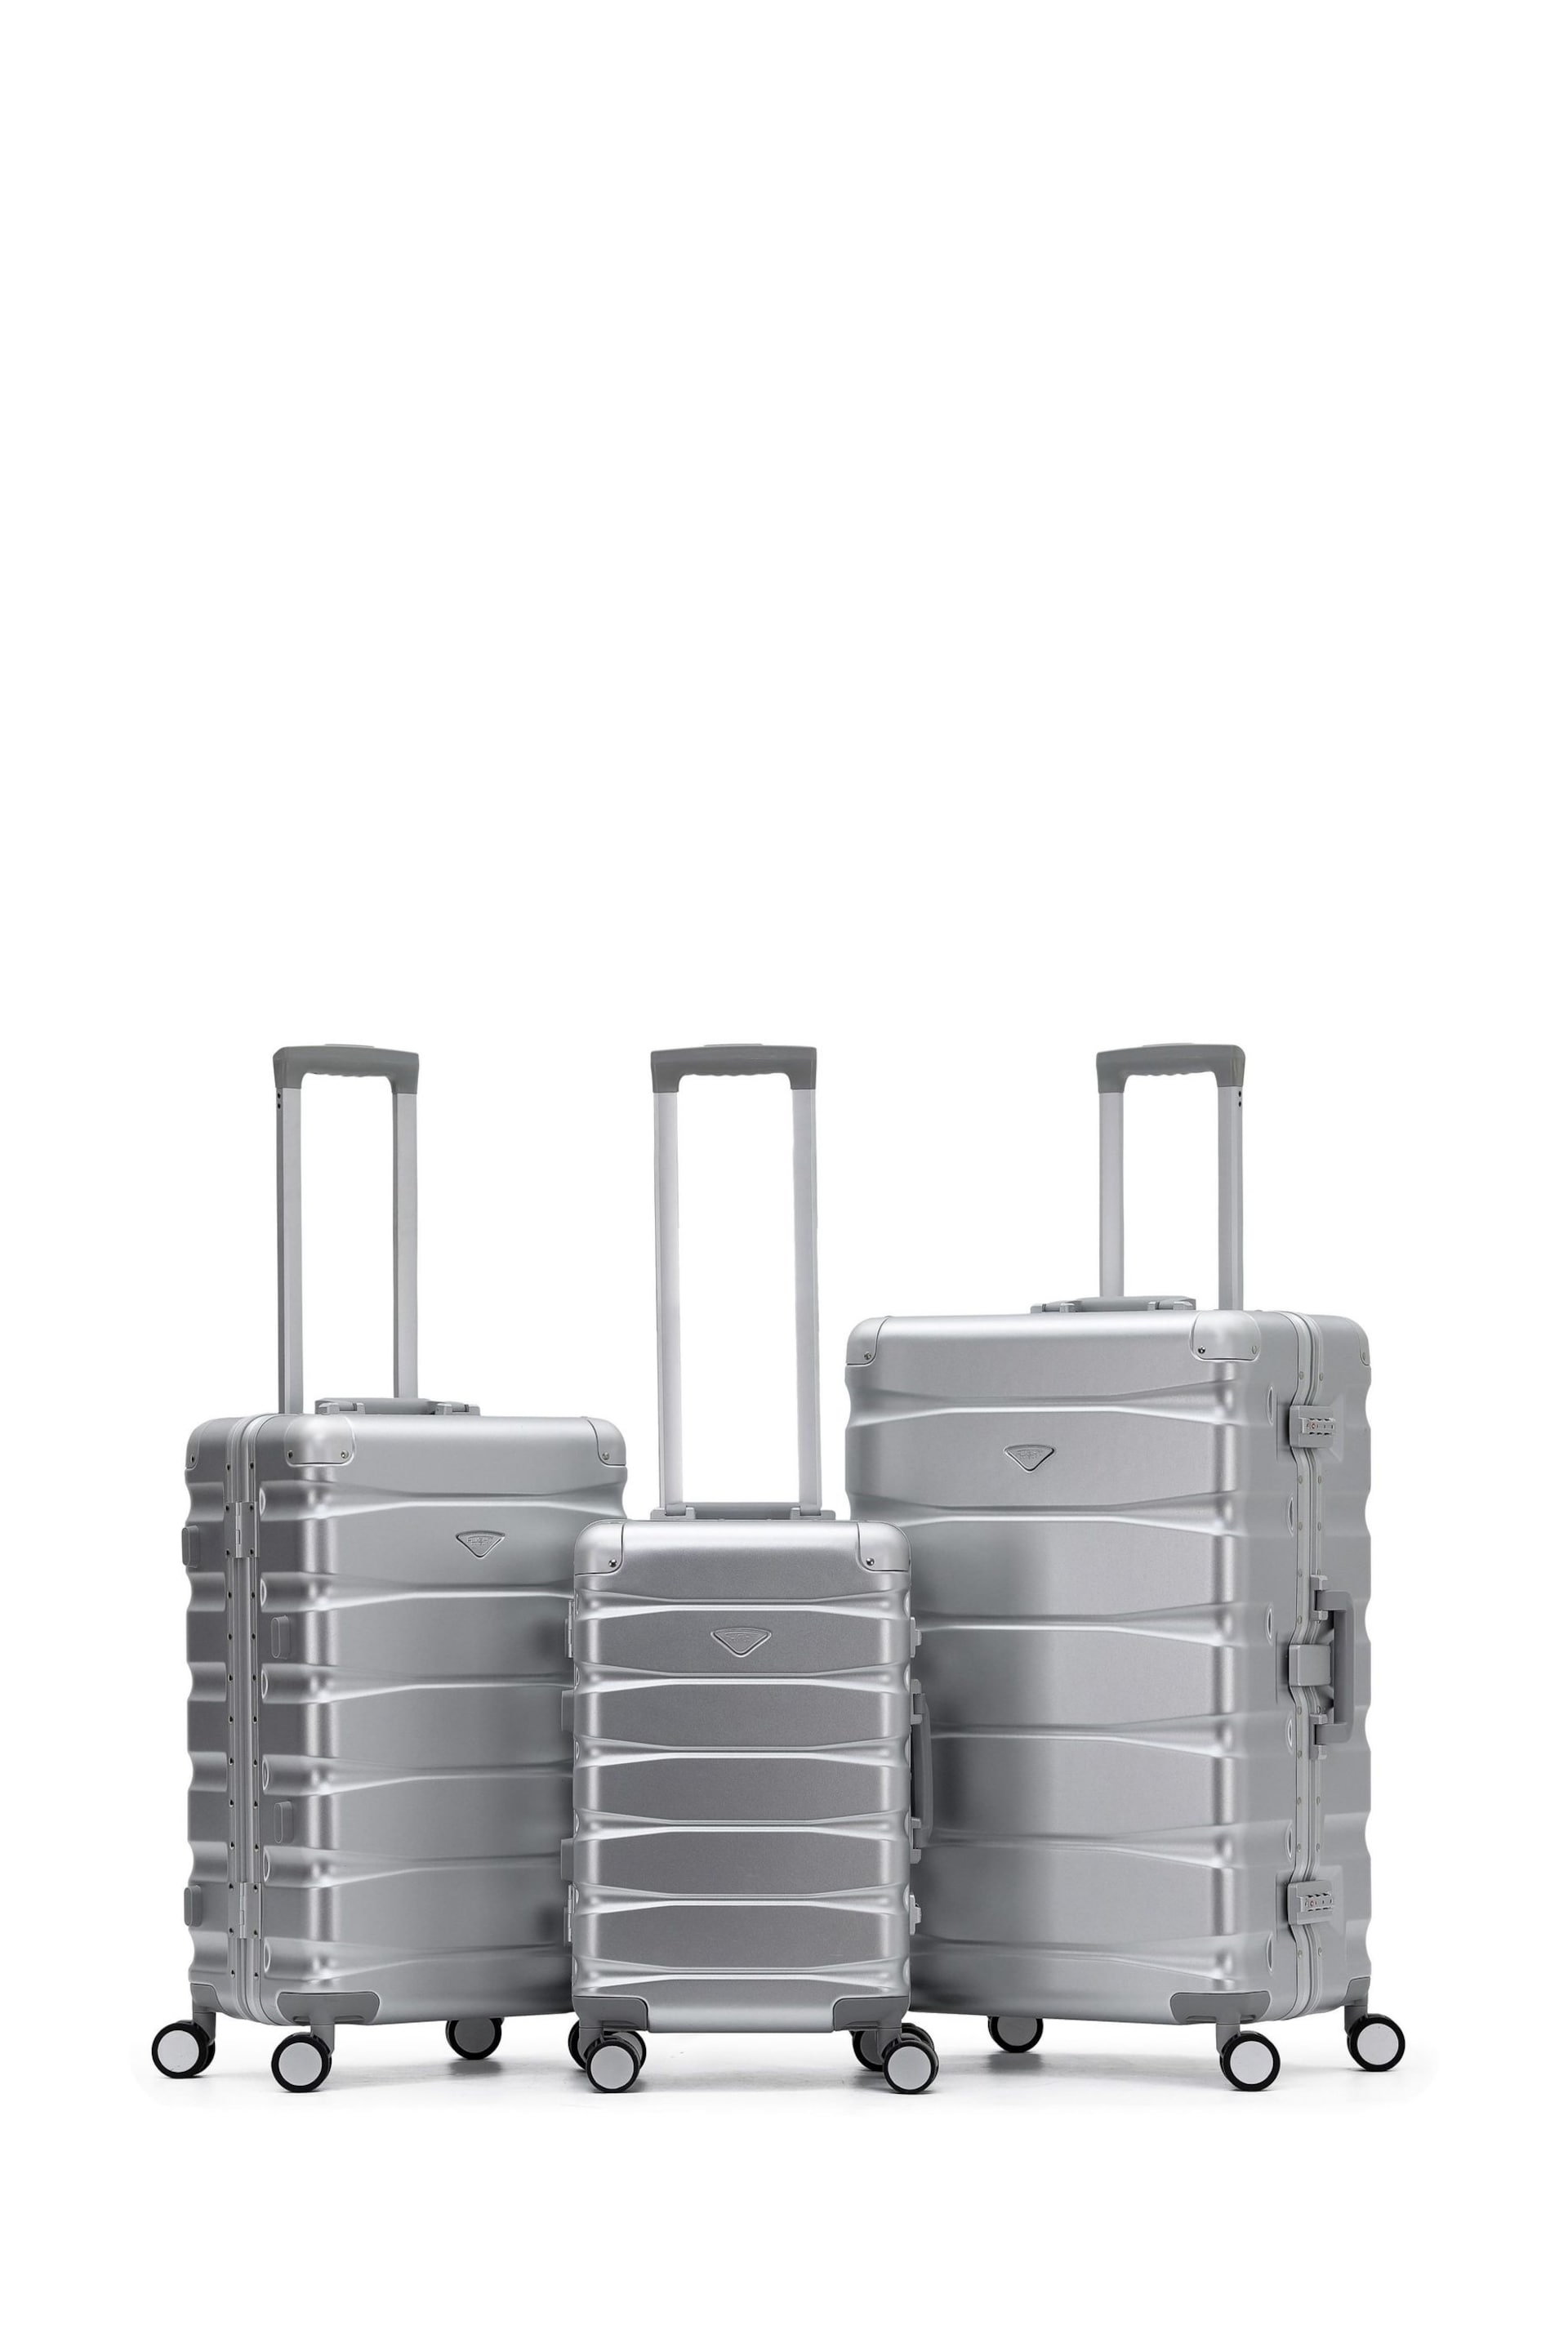 Flight Knight Silver Premium Travel Suitcase Set, 8 Wheels, Aluminium Frame, ABS Body - Image 1 of 2